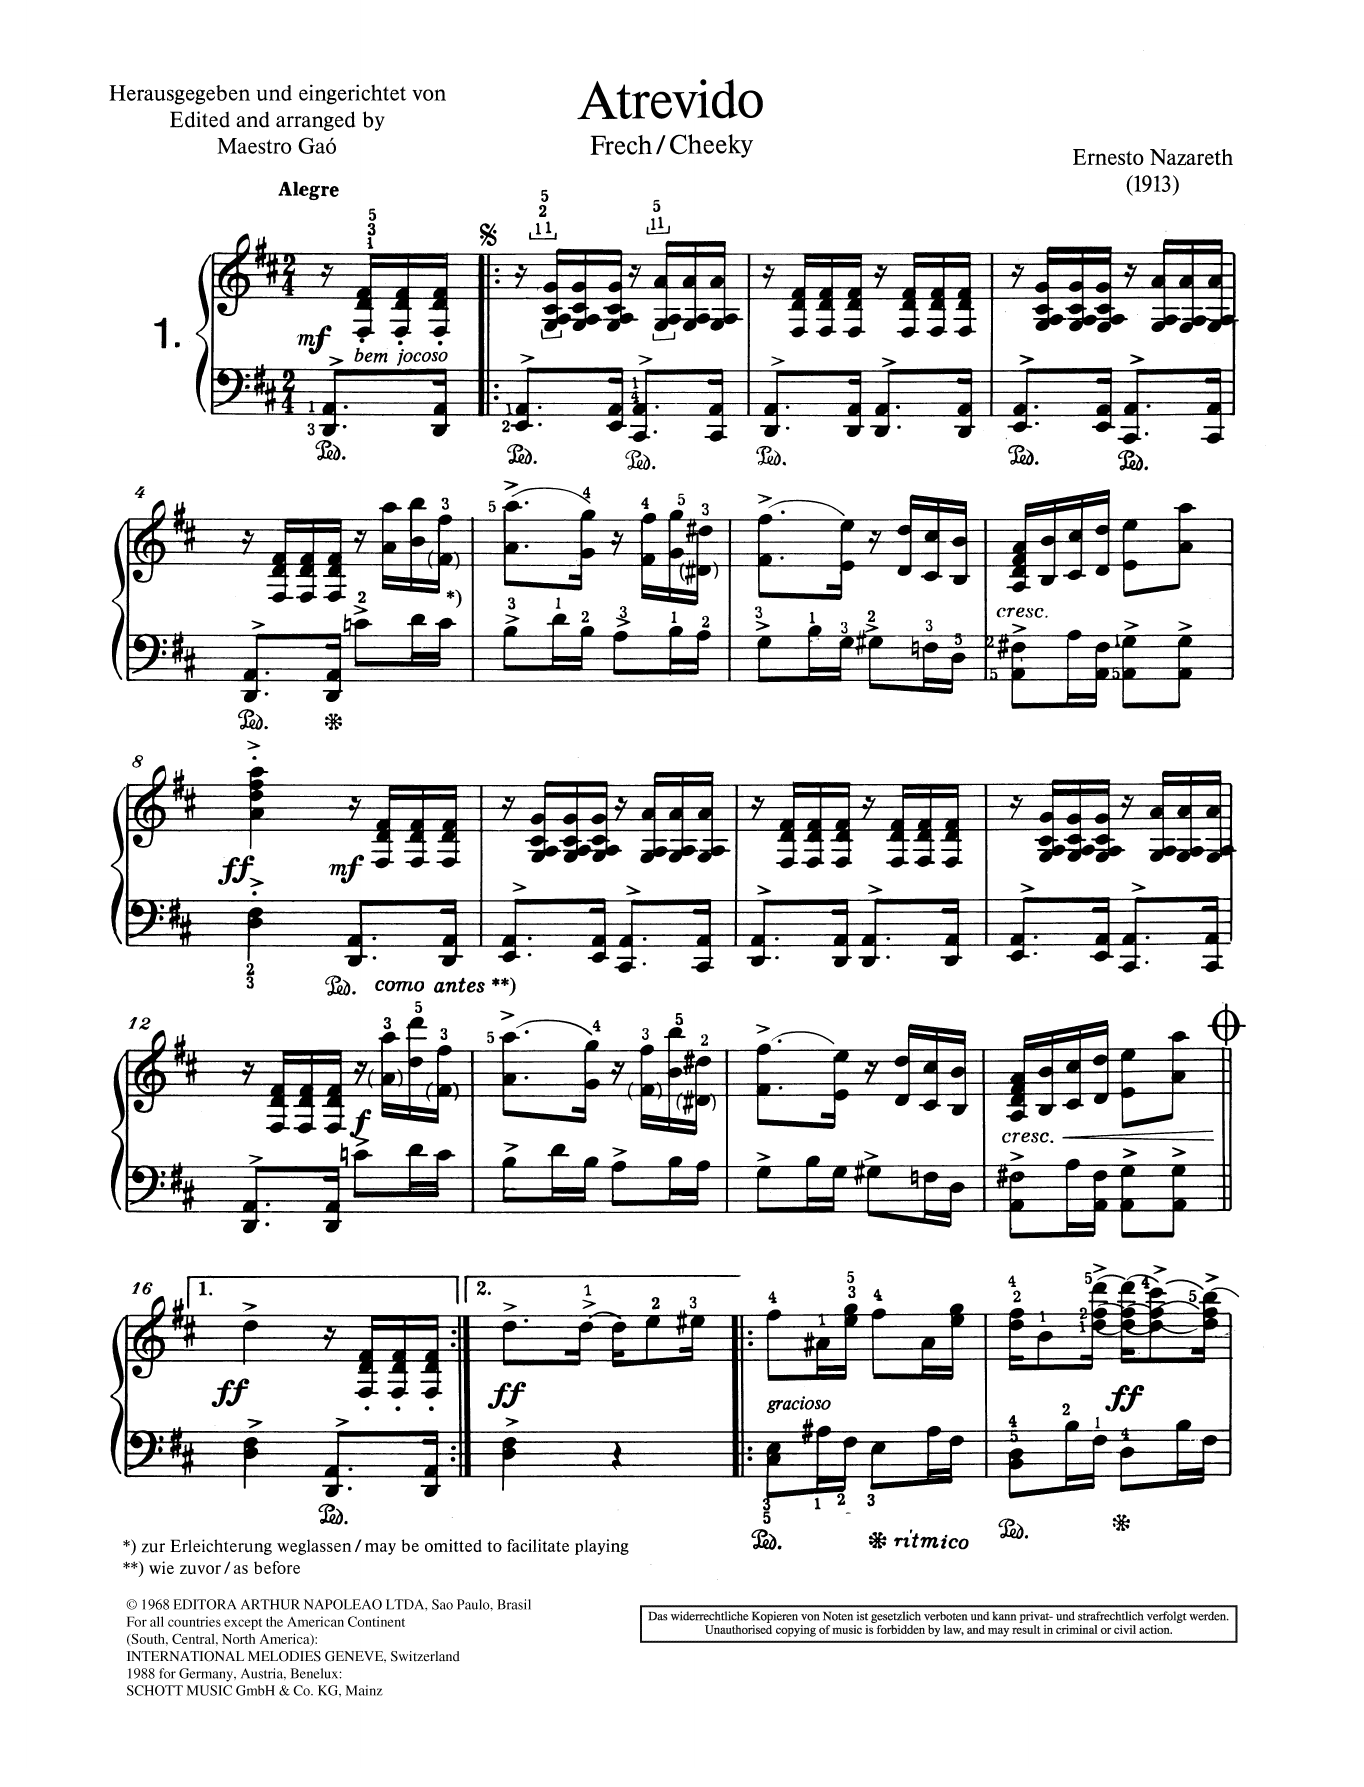 Ernesto Nazareth Atrevido Sheet Music Notes & Chords for Piano Solo - Download or Print PDF